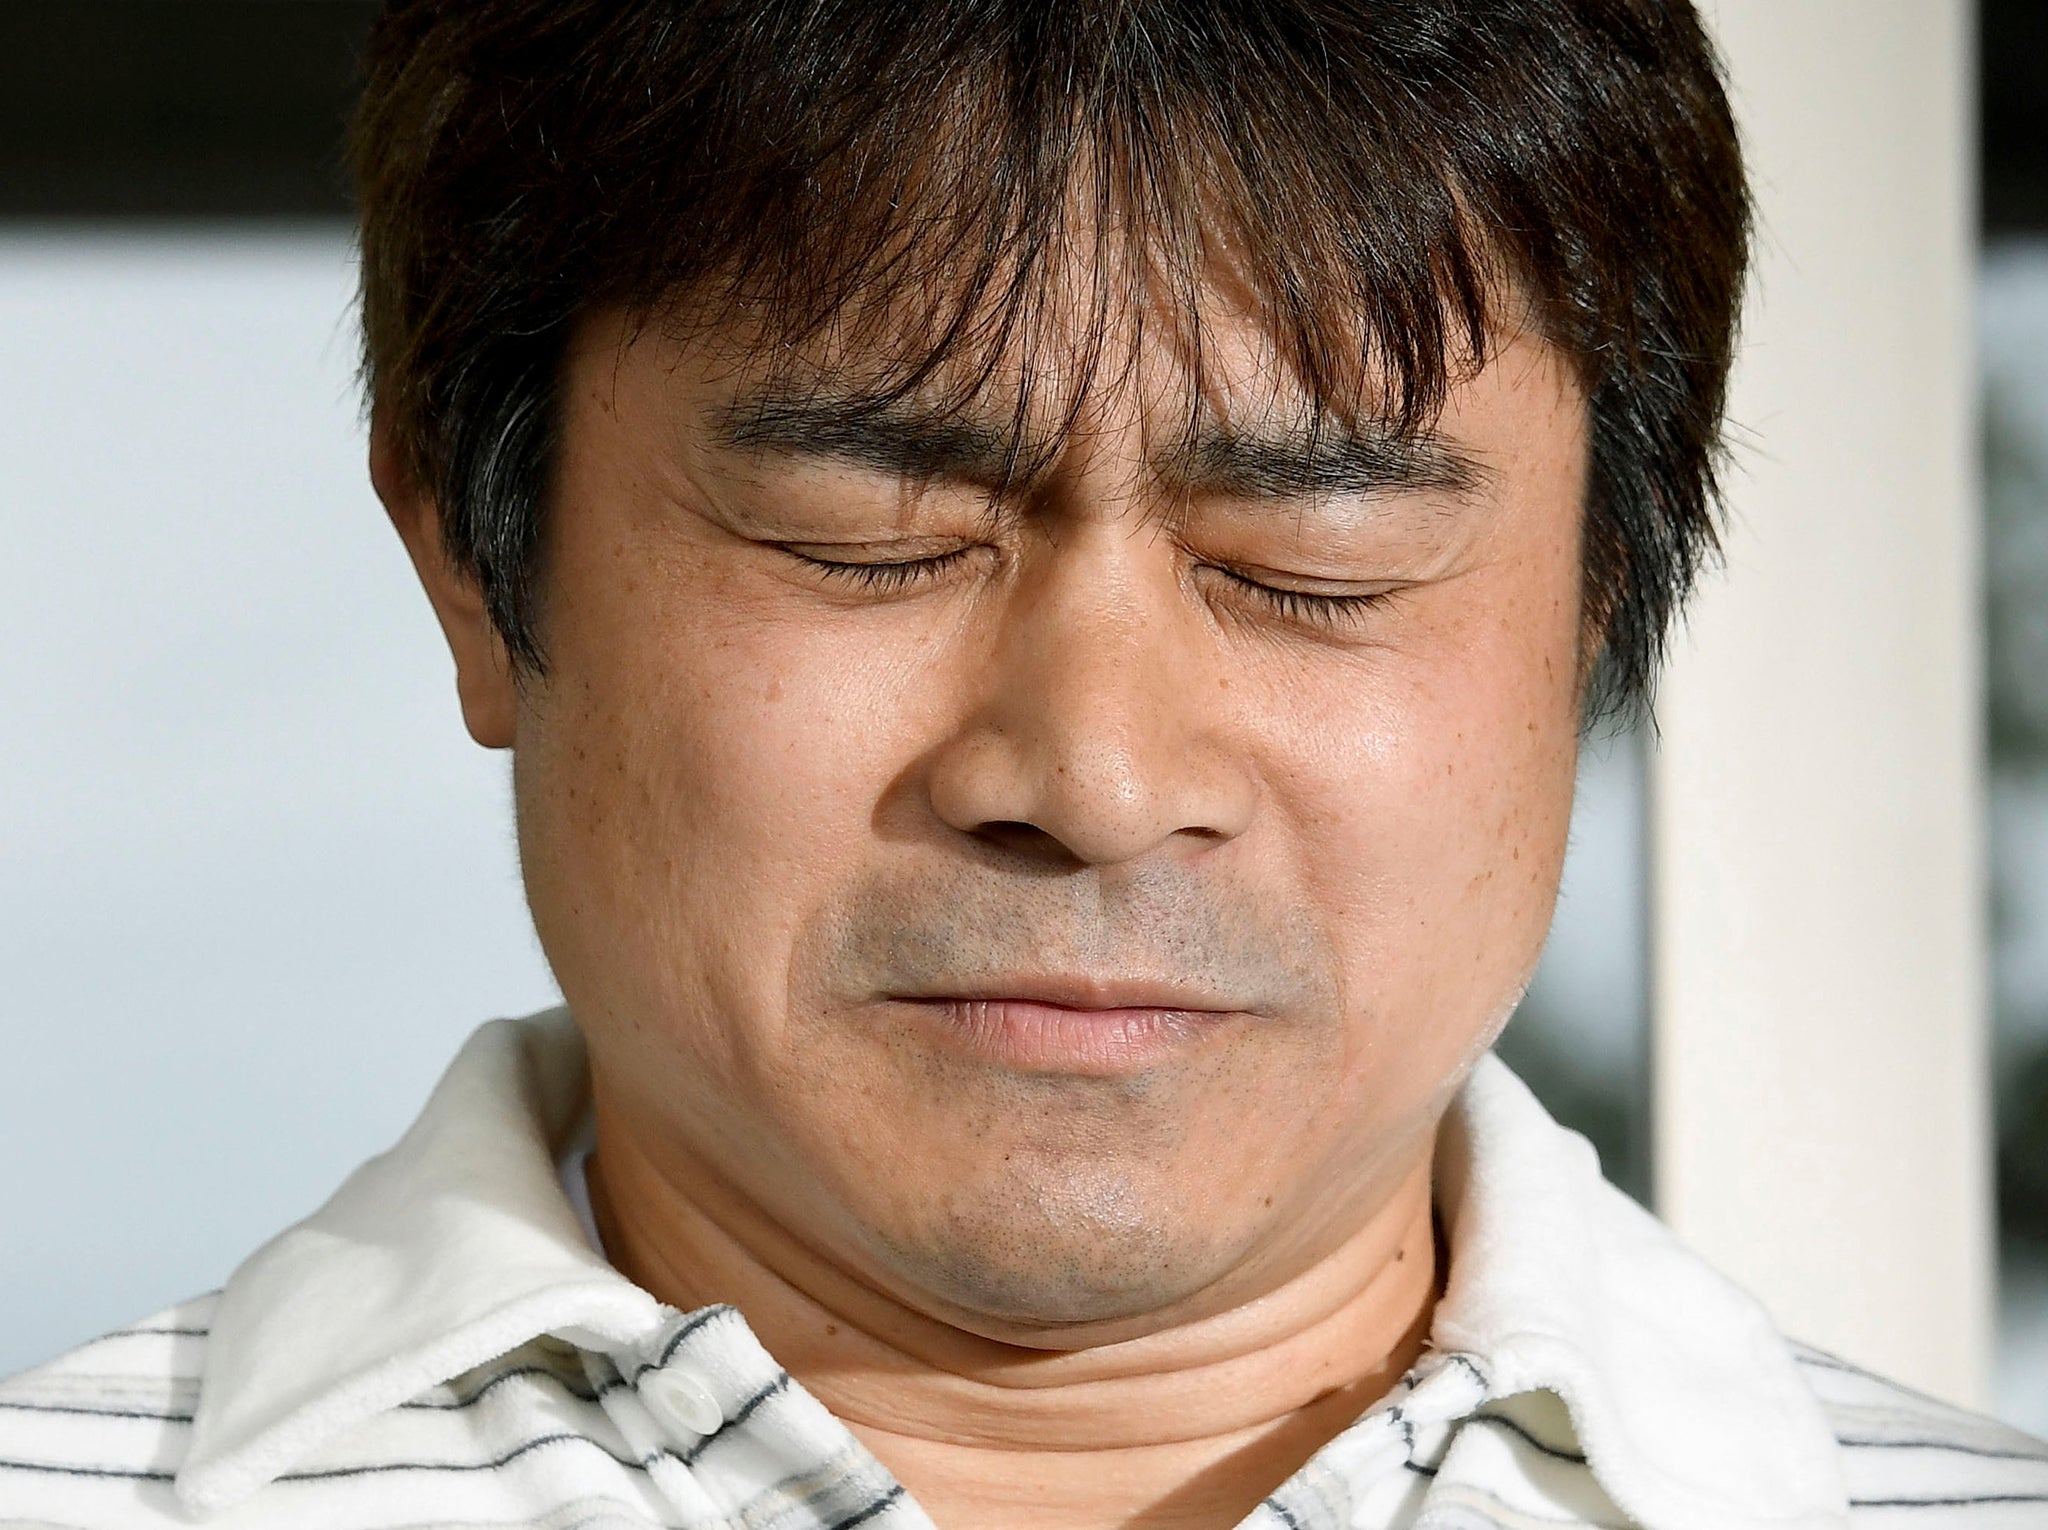 Takayuki Tanooka, father of 7-year-old boy Yamato Tanooka who went missing